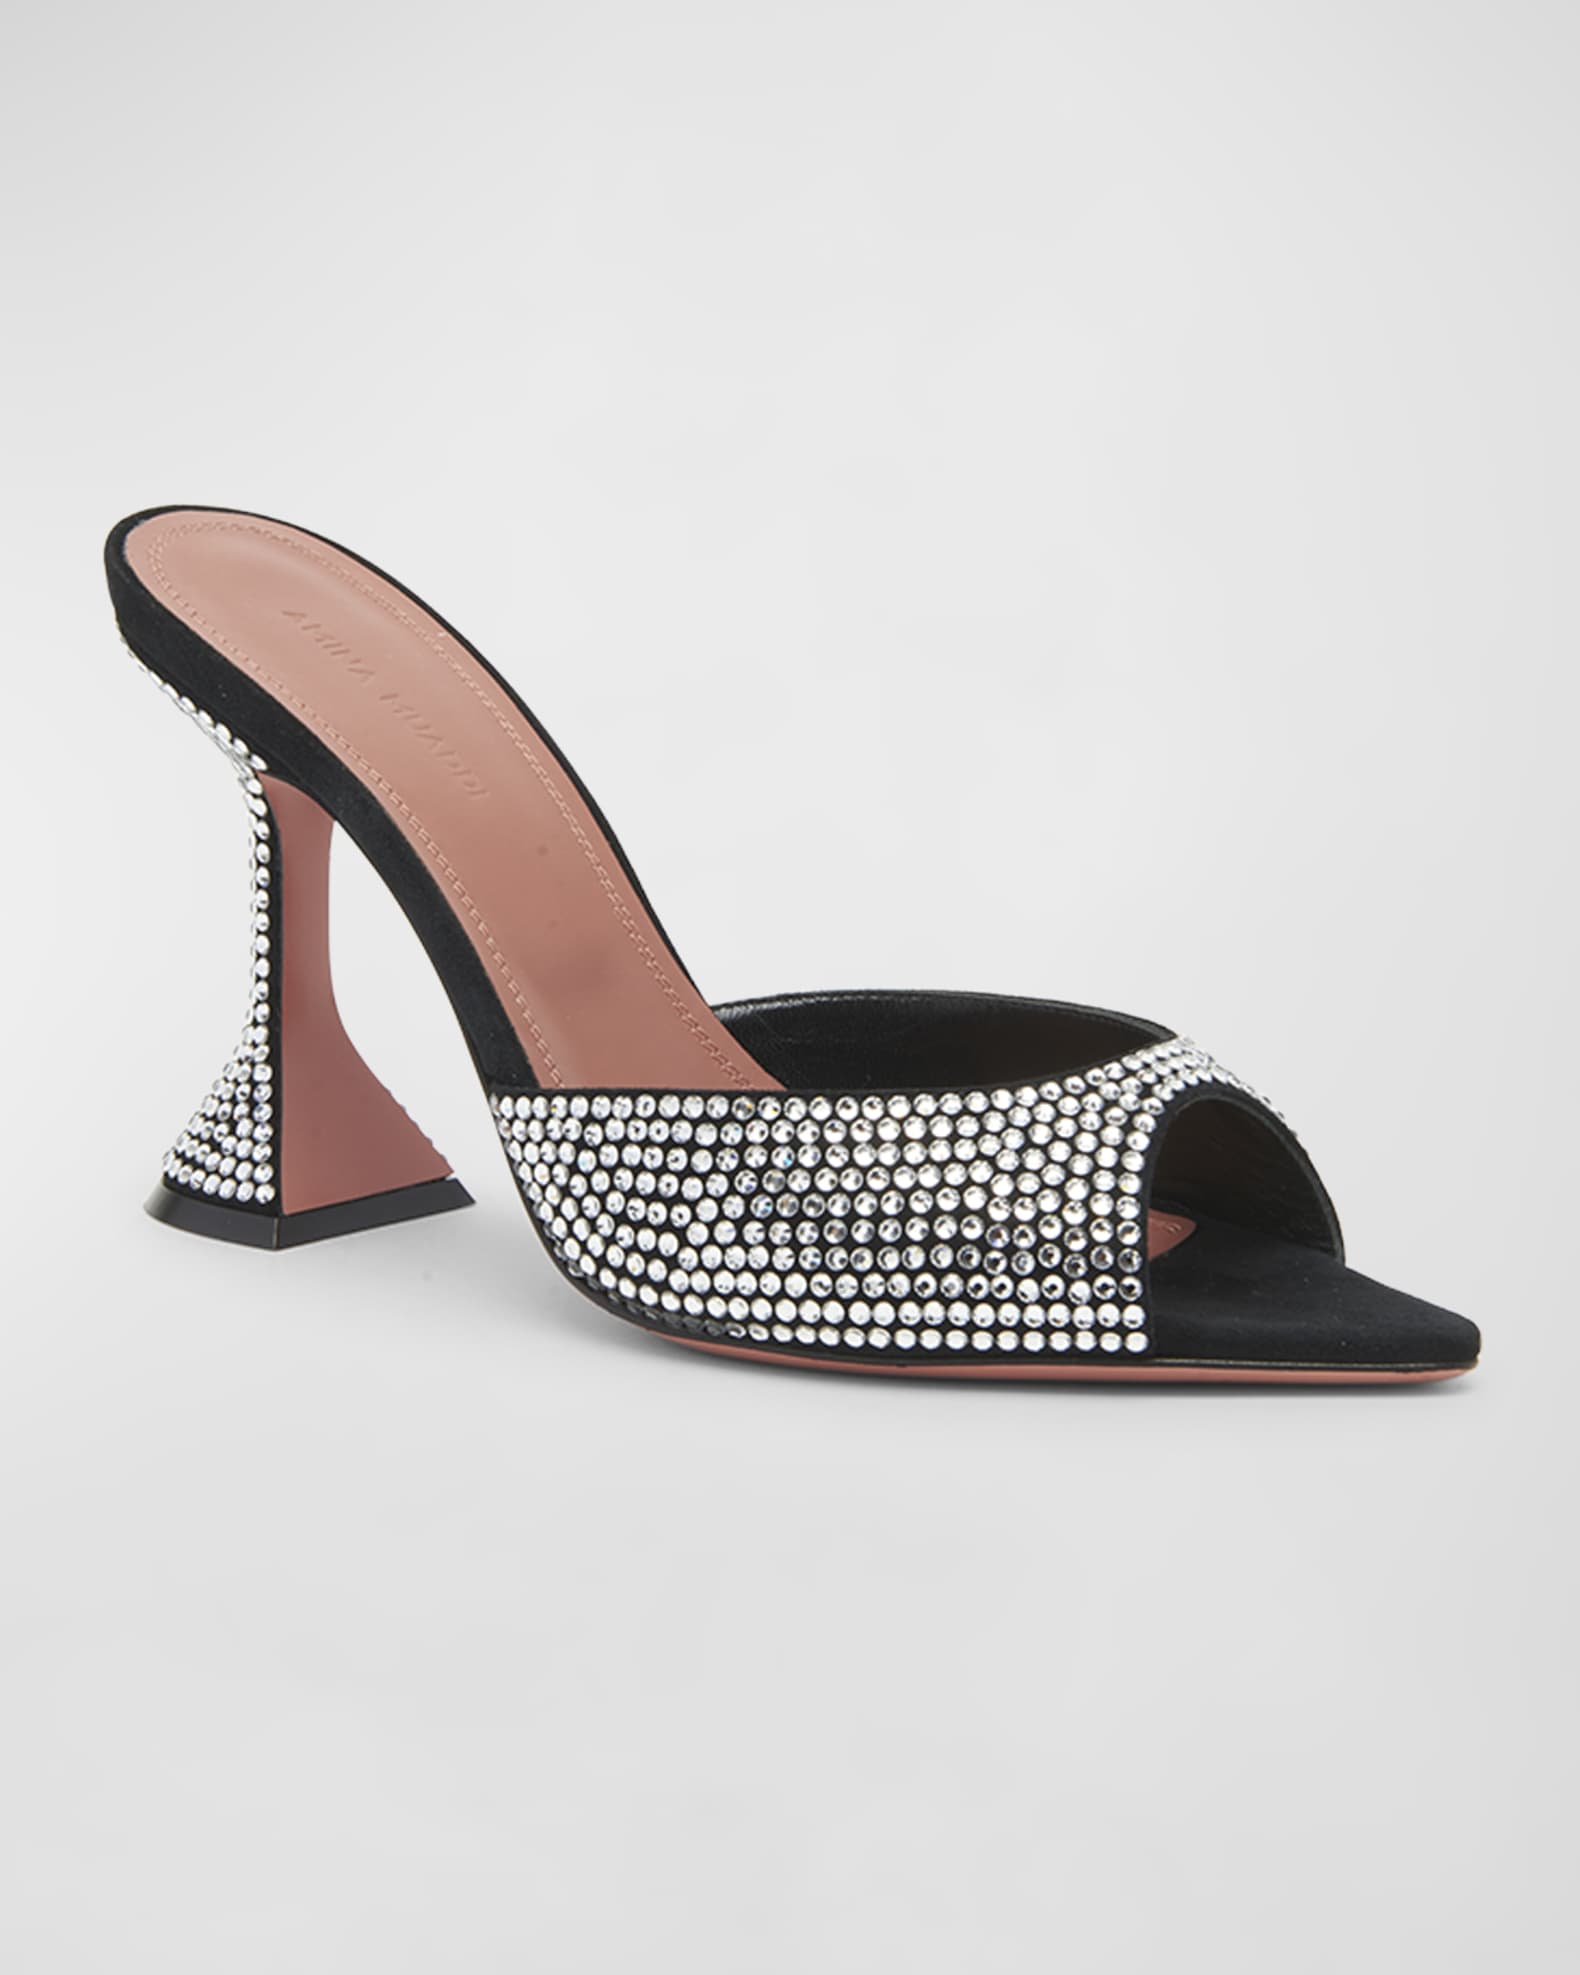 Amina Muaddi Caroline Crystal Cocktail Mule Sandals | Neiman Marcus